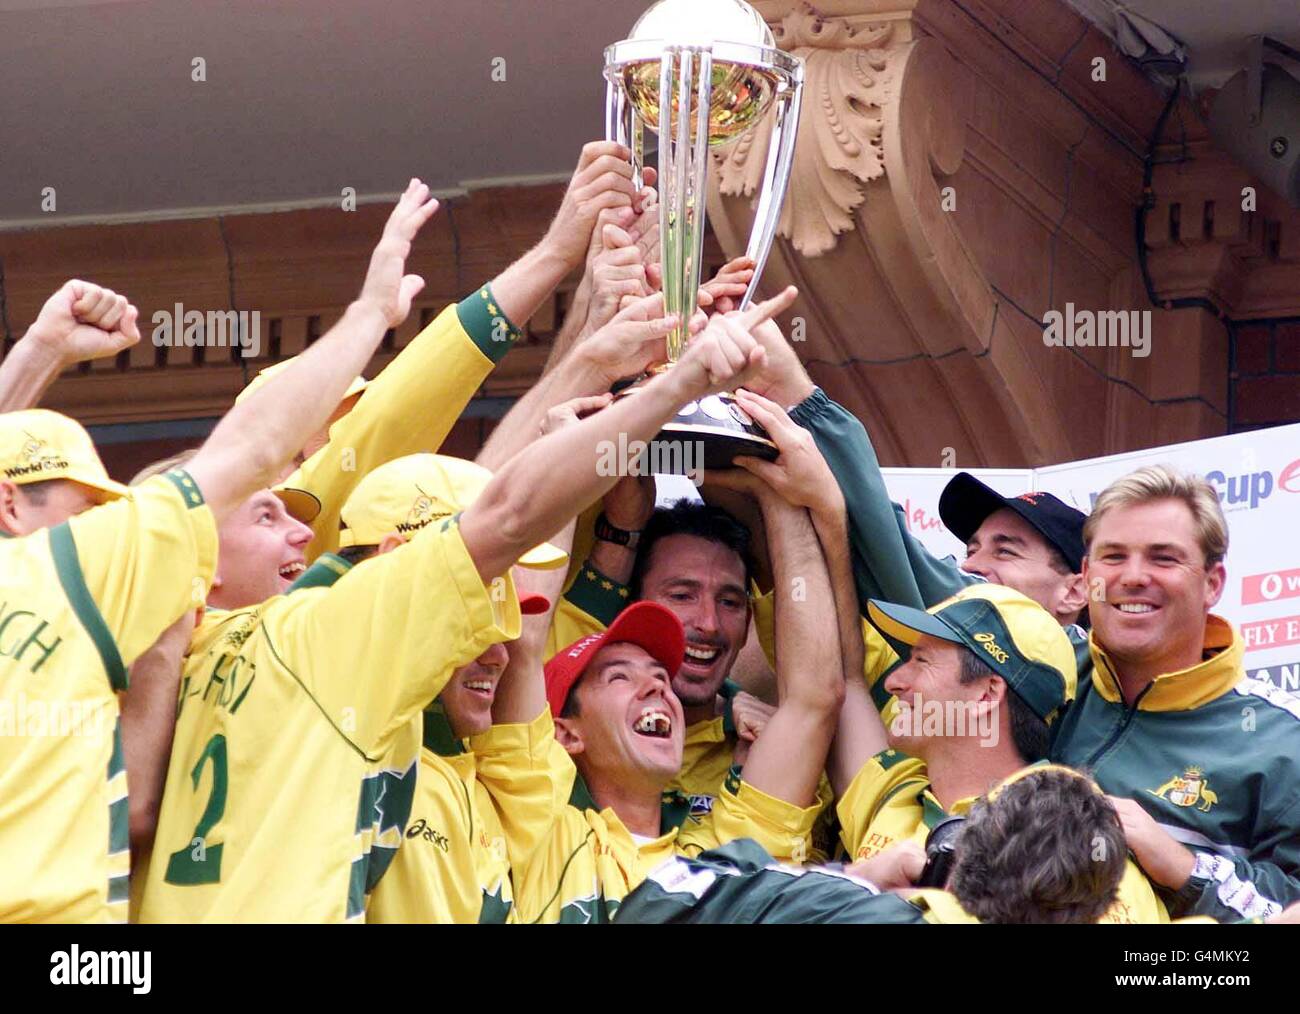 Cricket/World Cup victors Stock Photo Alamy